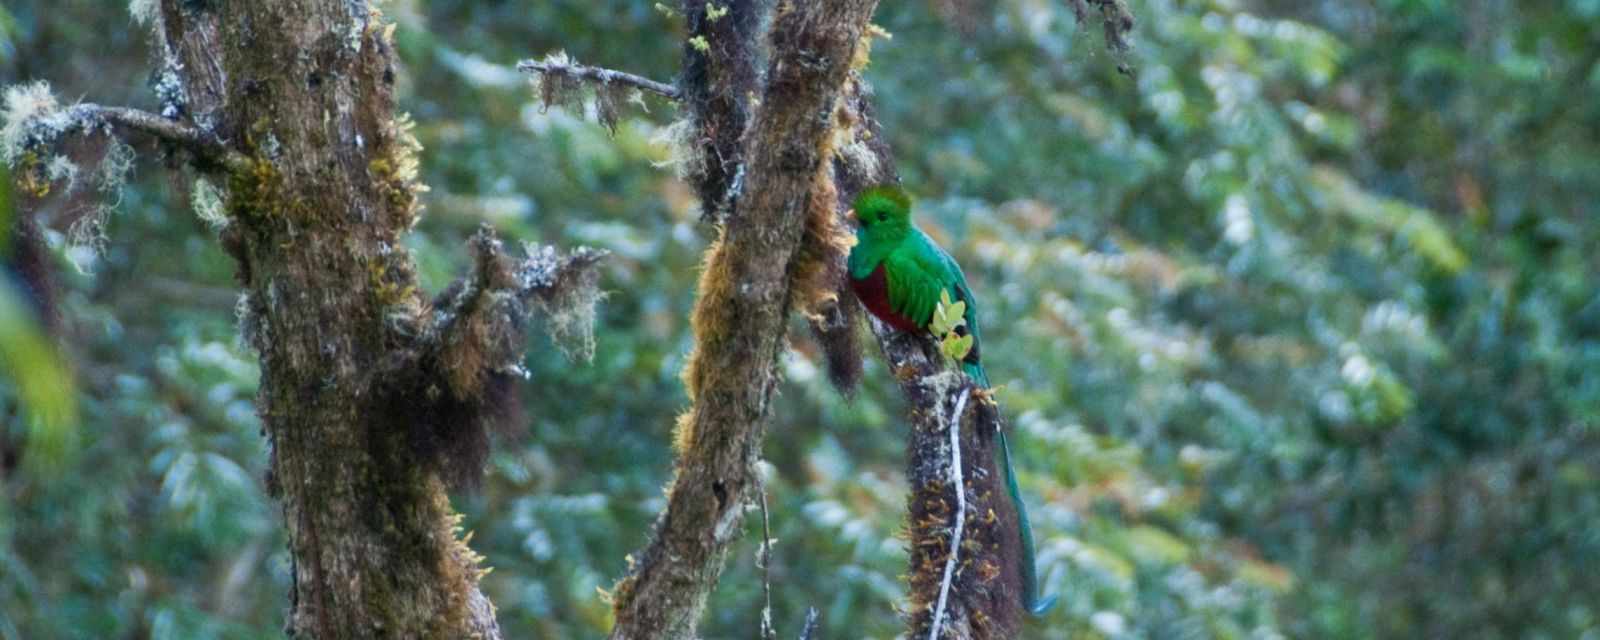 Tips to Spot the Quetzal in the Parque Nacional Los Quetzales